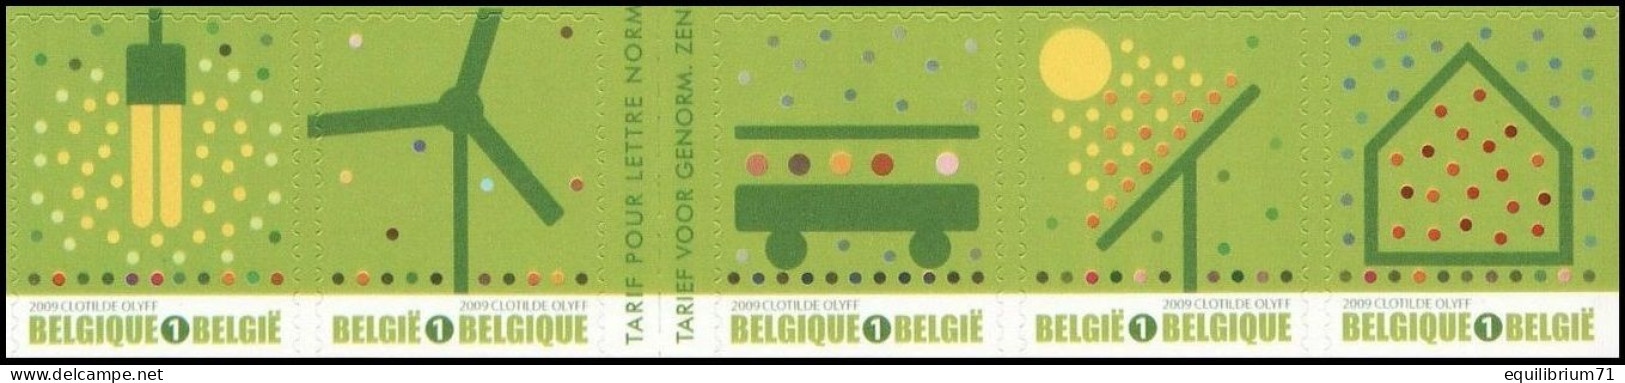 B104/C104**(3911-14 + 3915a) - Timbres Verts/Groene Zegels/Grüne Briefmarken - 1/2 Carnet/1/2 Boekje - BELGIQUE / BELGIË - 1997-… Dauerhafte Gültigkeit [B]